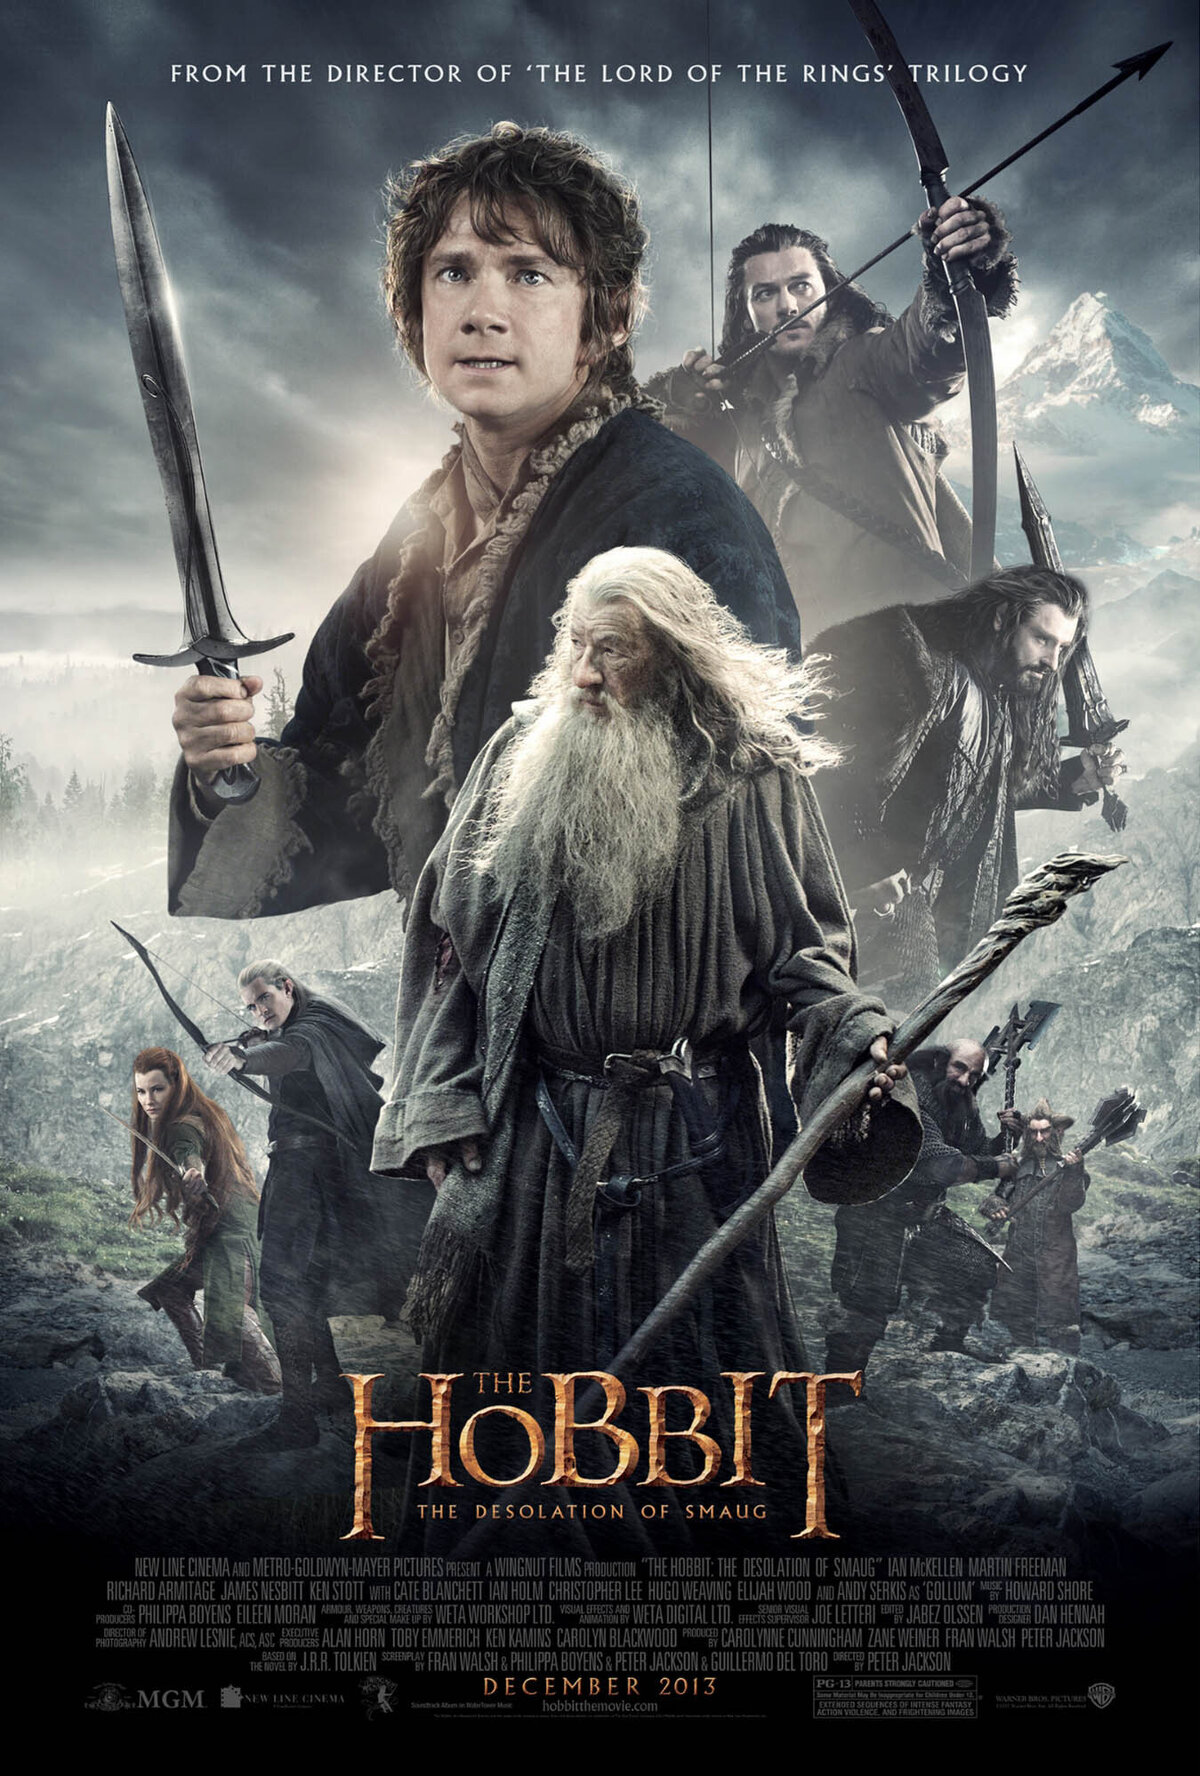 The hobbit poster designs